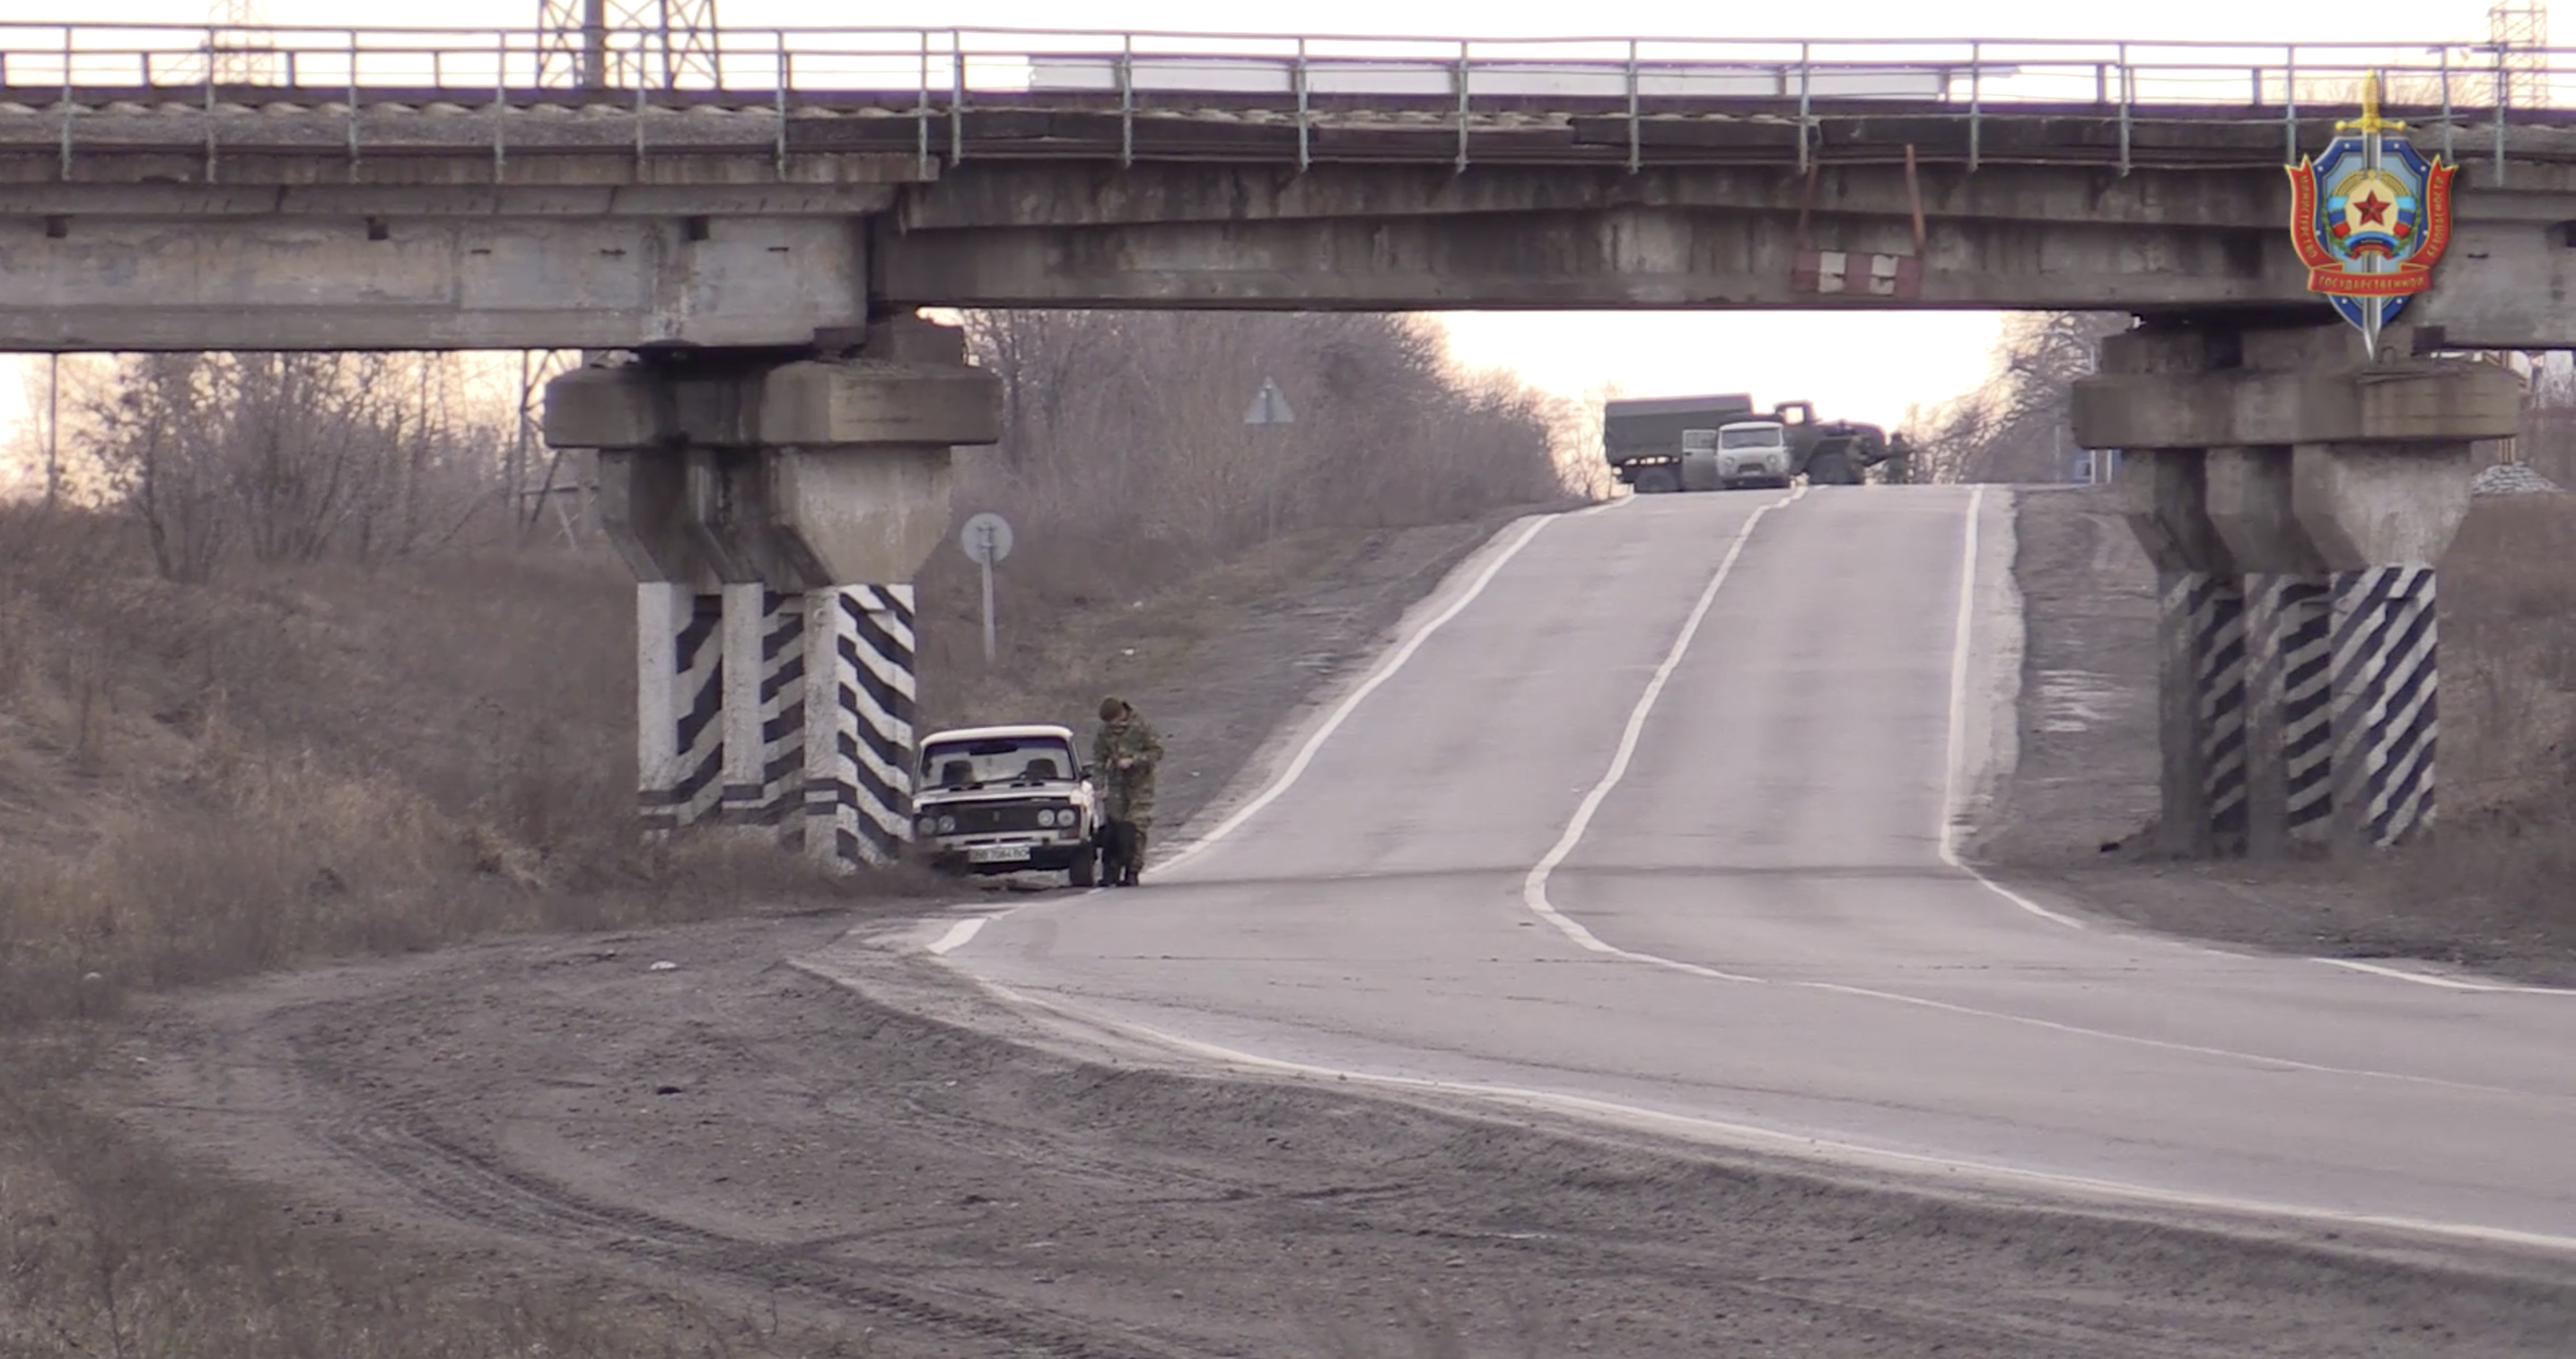 Video still shows car under railway bridge in Luhansk, Ukraine, said to be a car bomb.